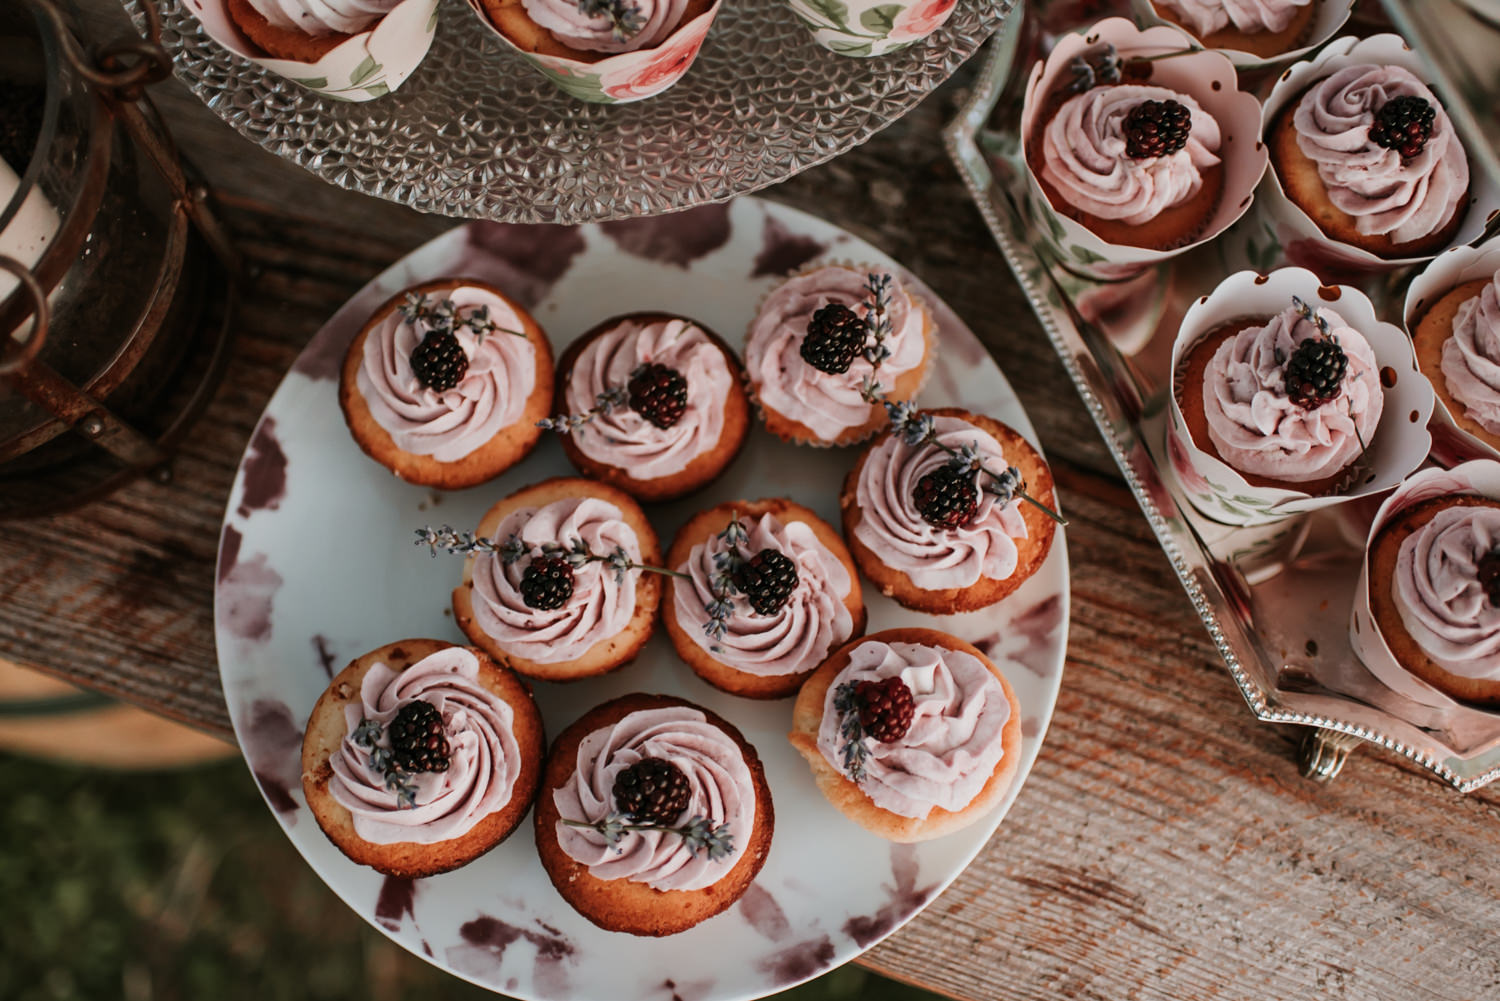 Homemade cupcakes for Pemberton wedding